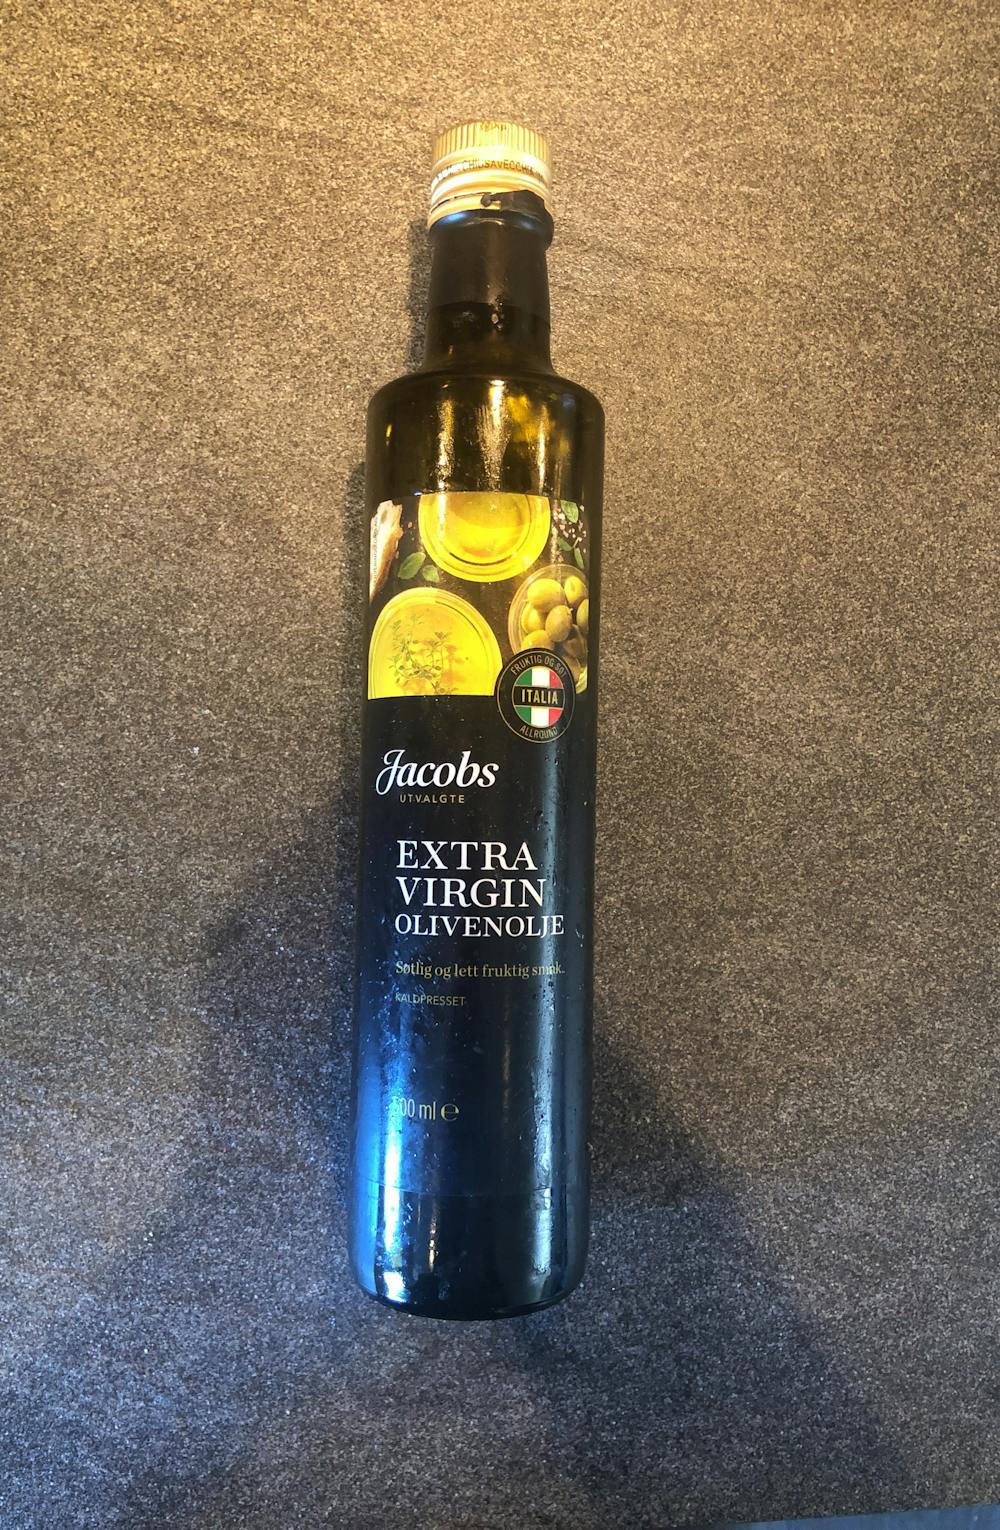 Extra virgin olivenolje, Jacobs utvalgte